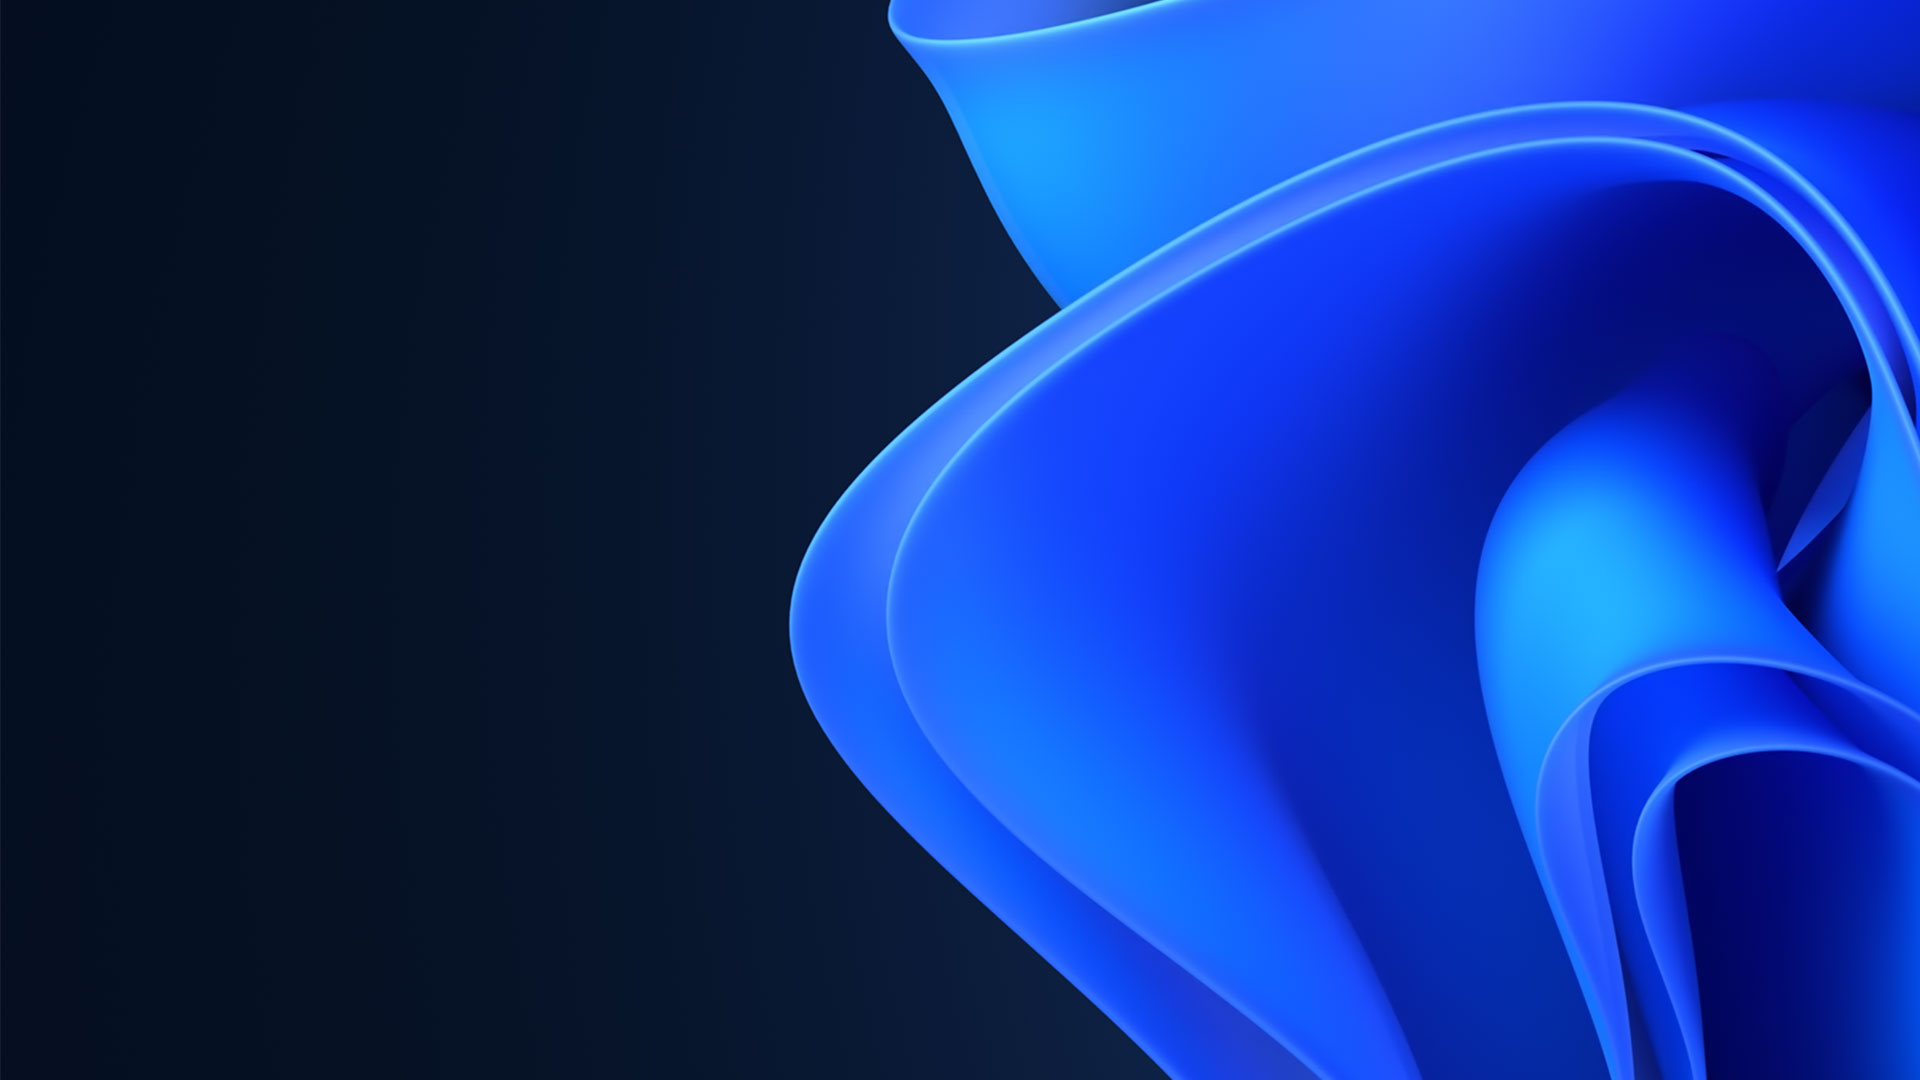  The Windows 11 blue ribbon bloom logo